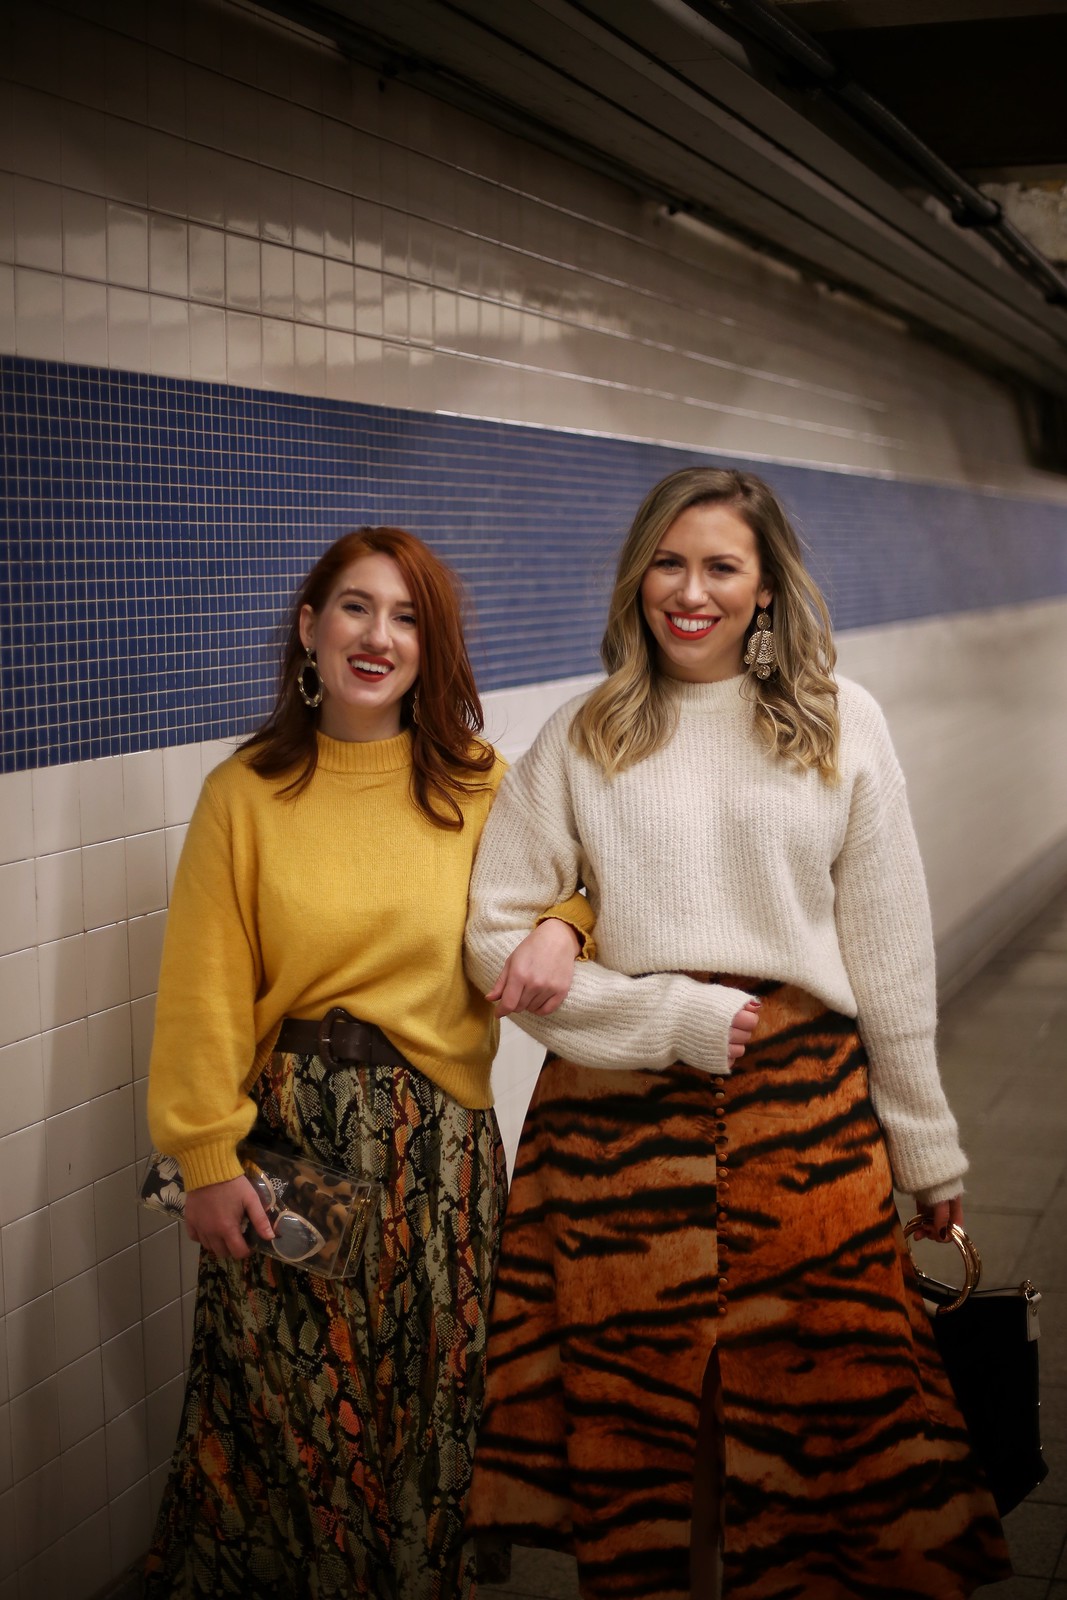 Animal Print Skirts Snake Print Skirt Tiger Print Skirt Fashion Bloggers Winter Outfits Canal Street Subway Fashion Photo Shoot